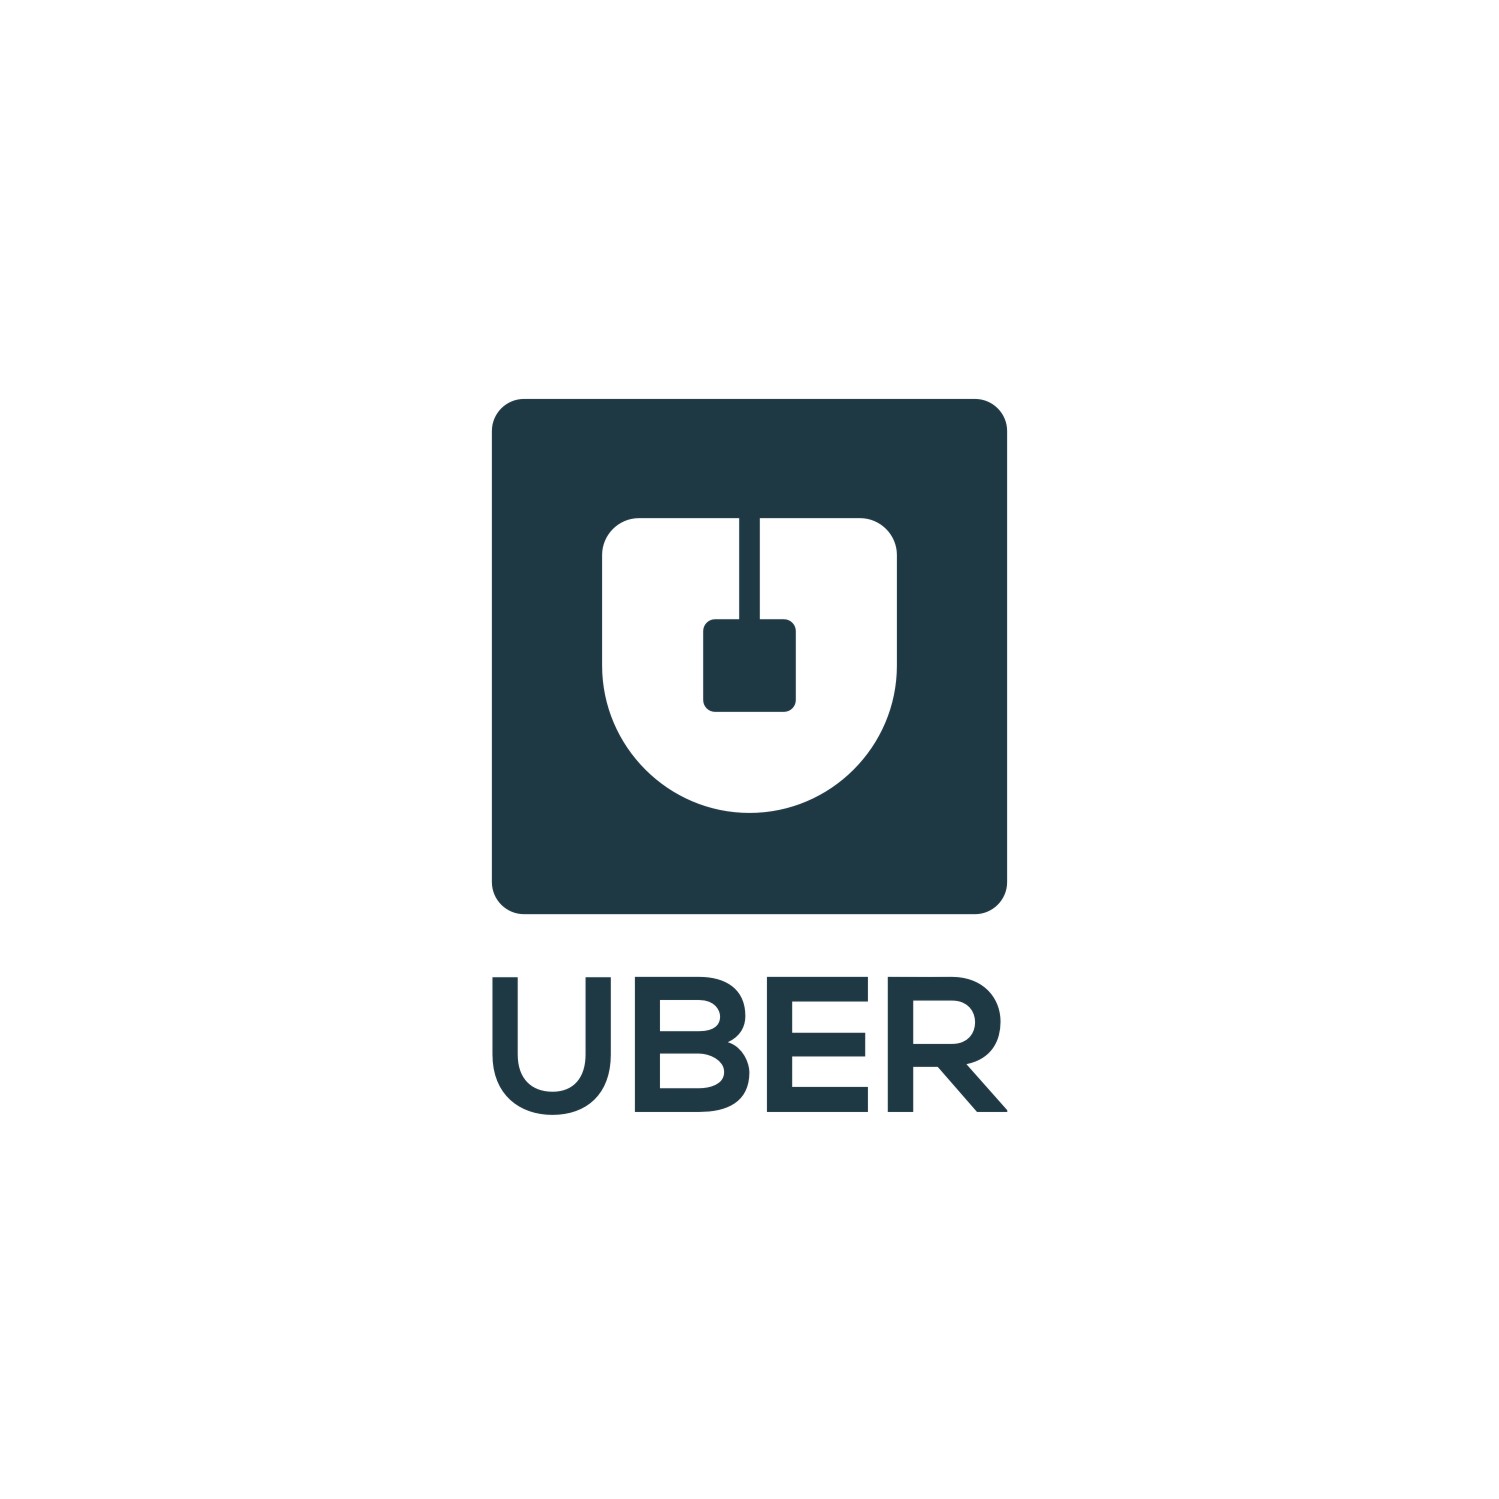 Uber Logo Vector PNG - 112505